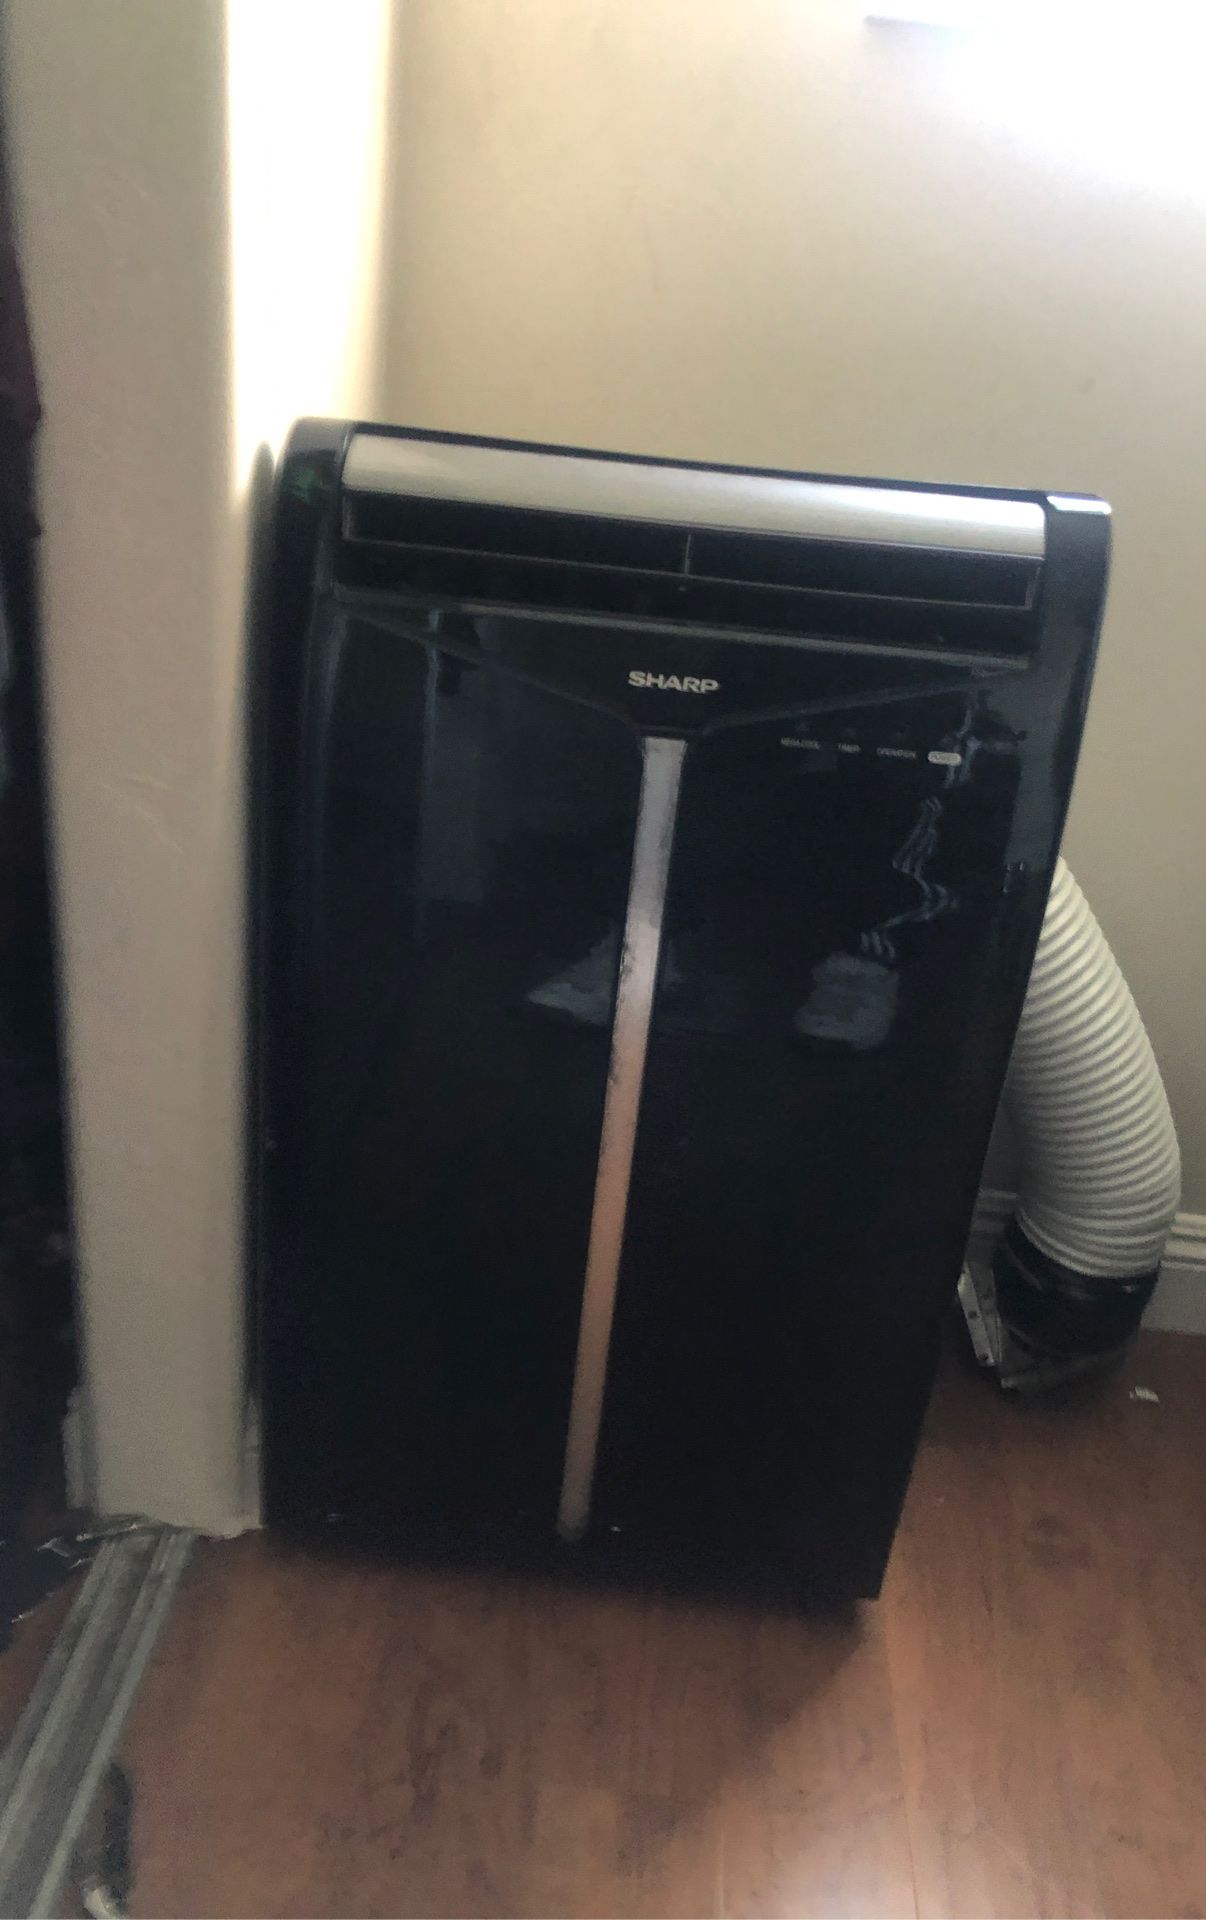 Air conditioner Sharp 1400 btu 100$